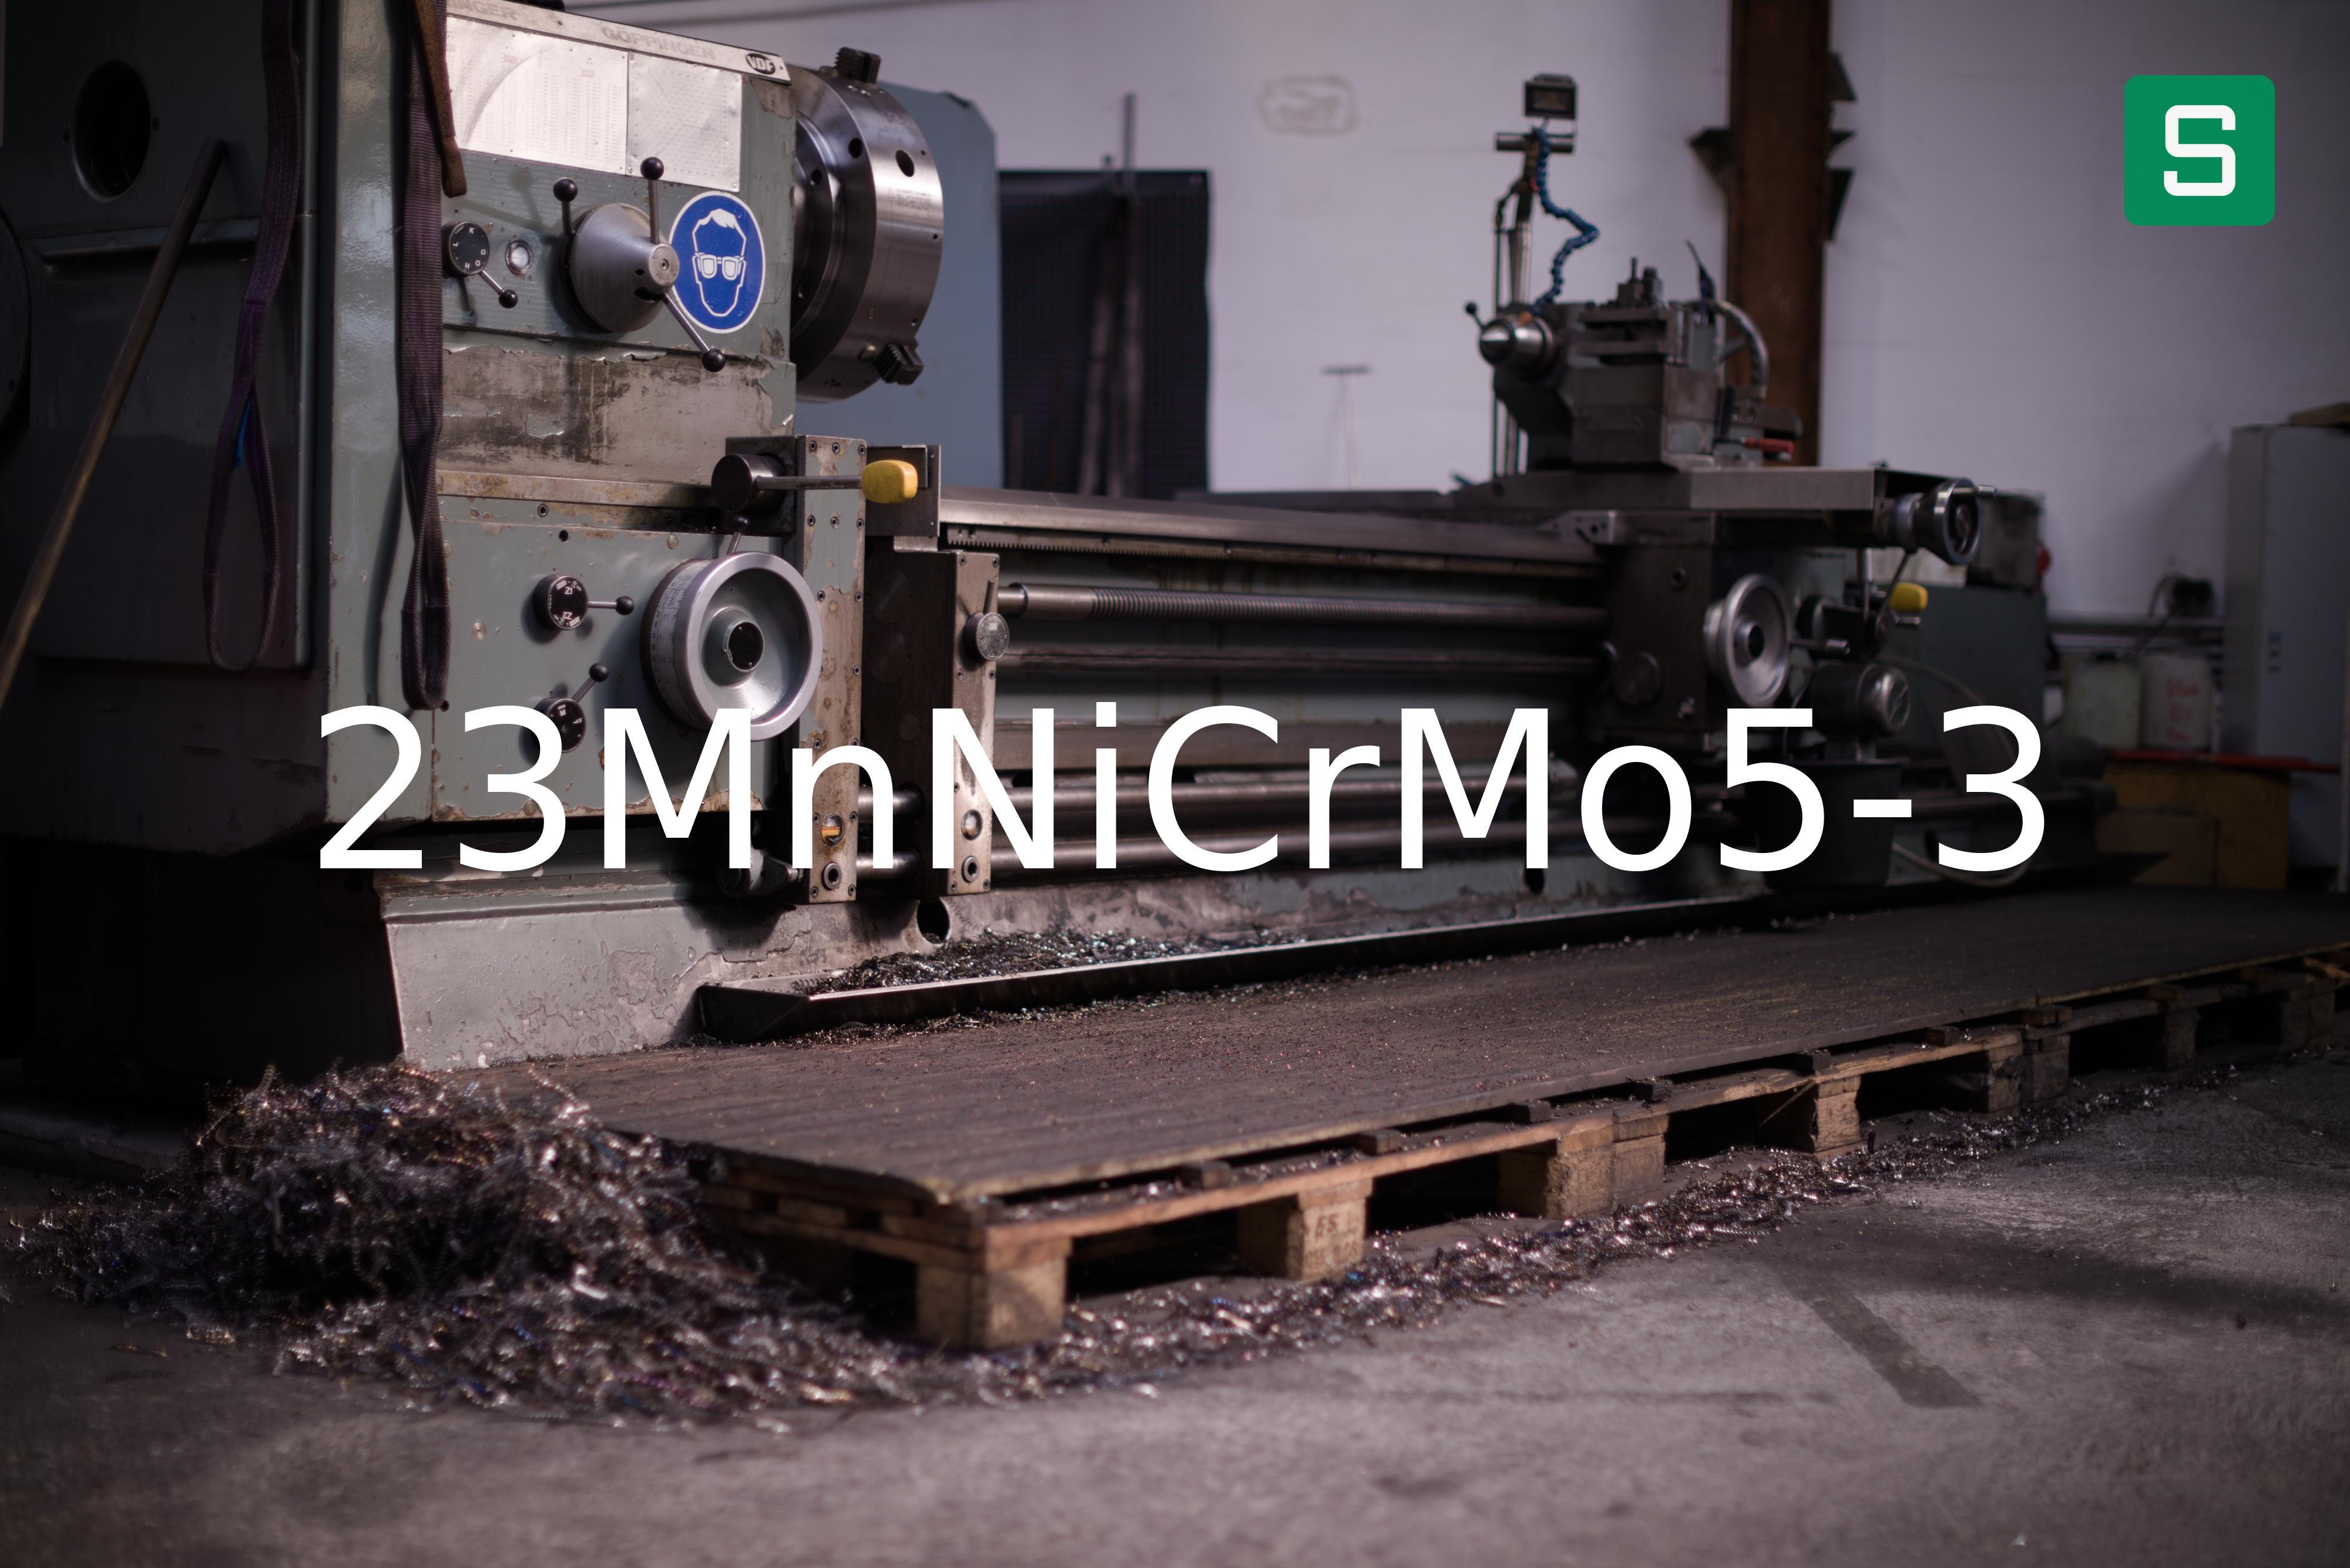 Steel Material: 23MnNiCrMo5-3